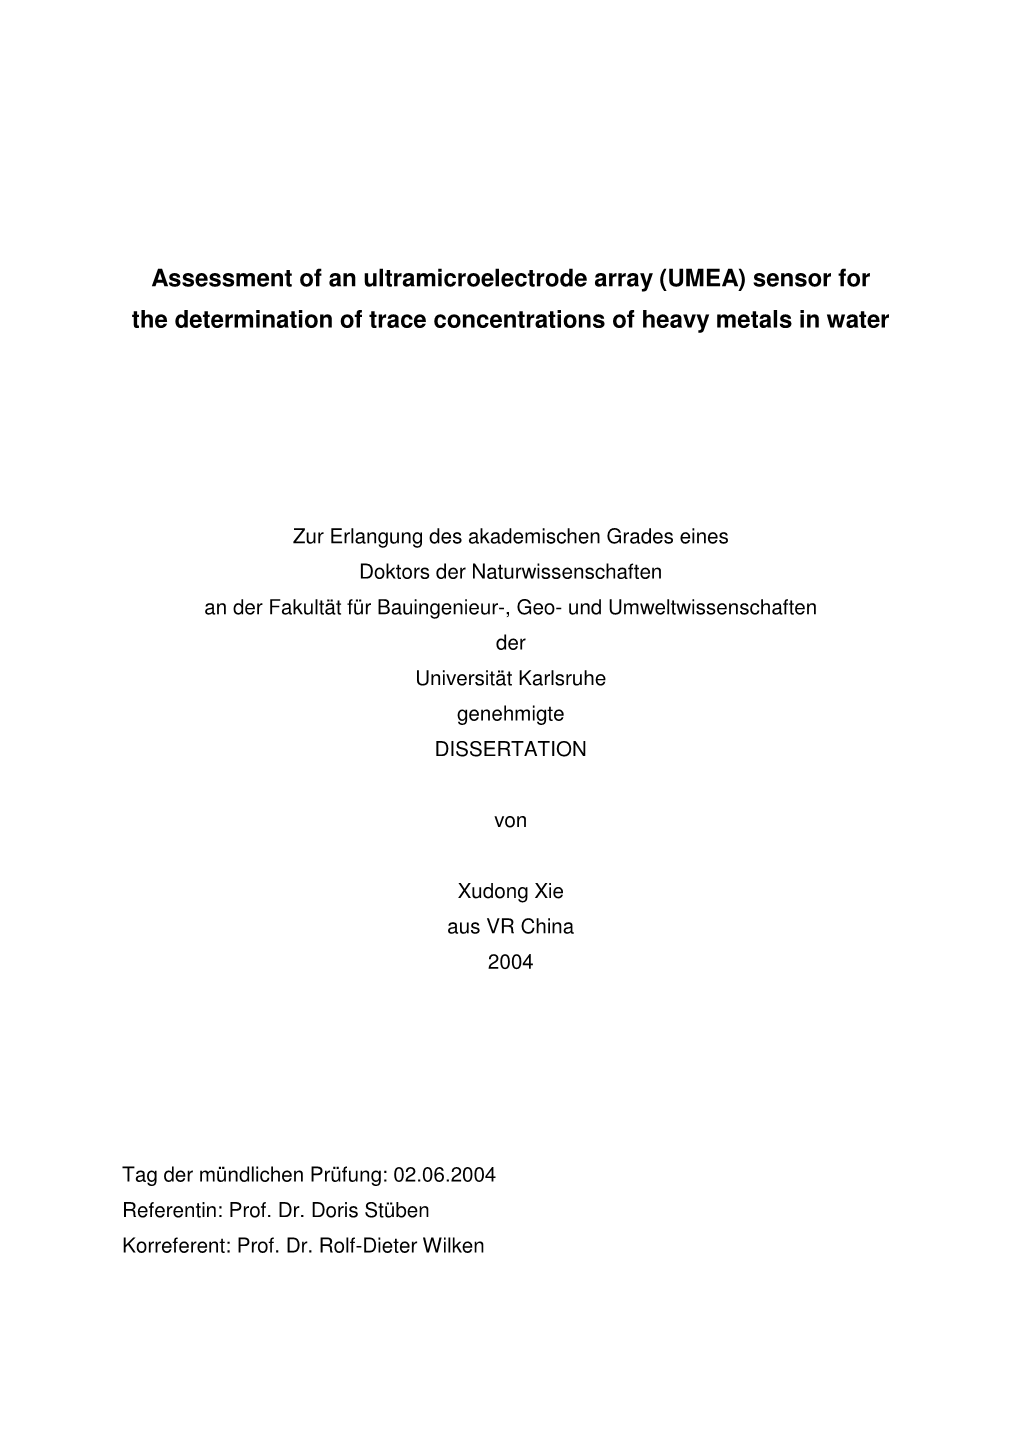 Assessment of an Ultramicroelectrode Array (UMEA) Sensor for The